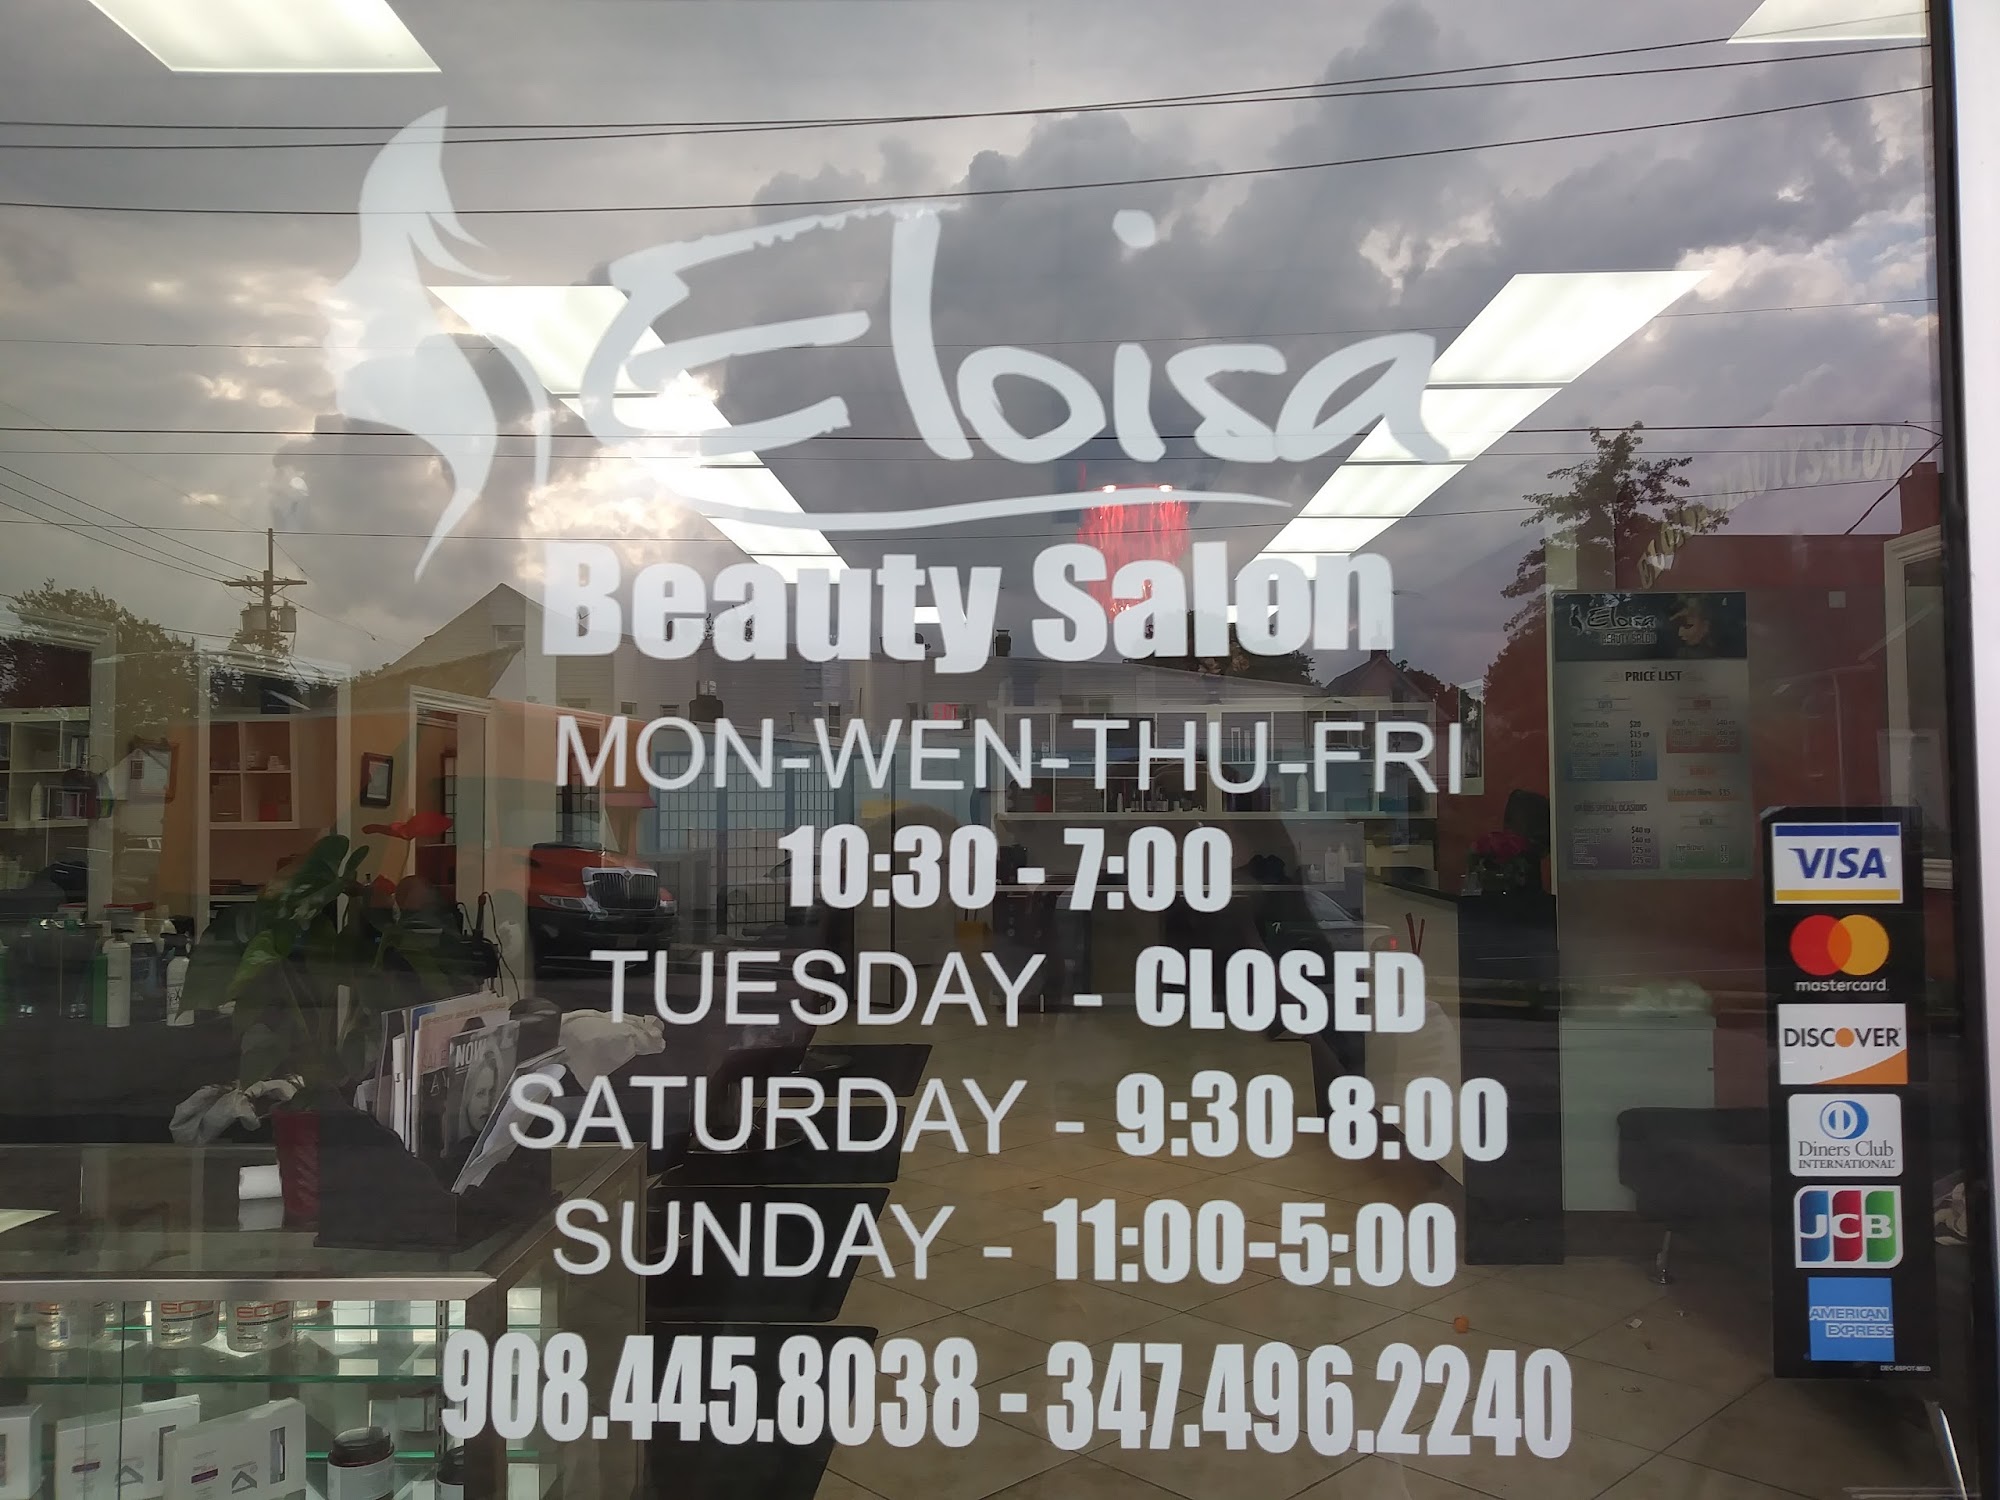 Eloisa Beauty Salon 207 Sheridan Ave #1420, Roselle New Jersey 07203